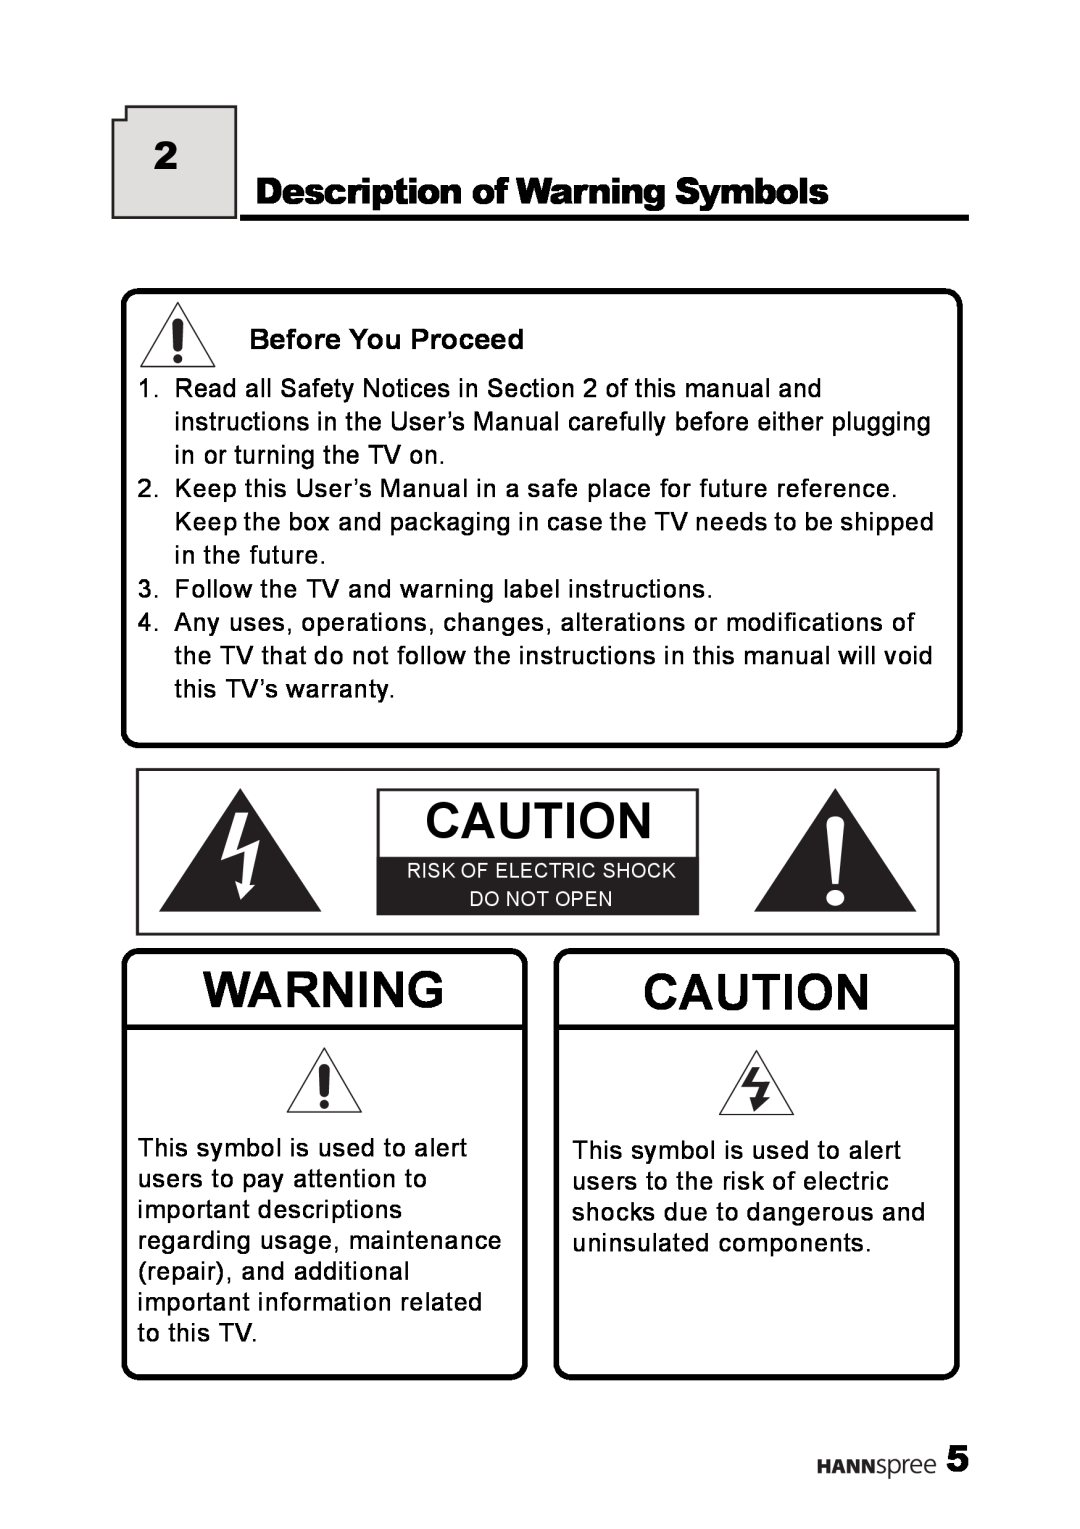 HANNspree LT09-10U1-000 user manual Warning Caution, Description of Warning Symbols, Before You Proceed 